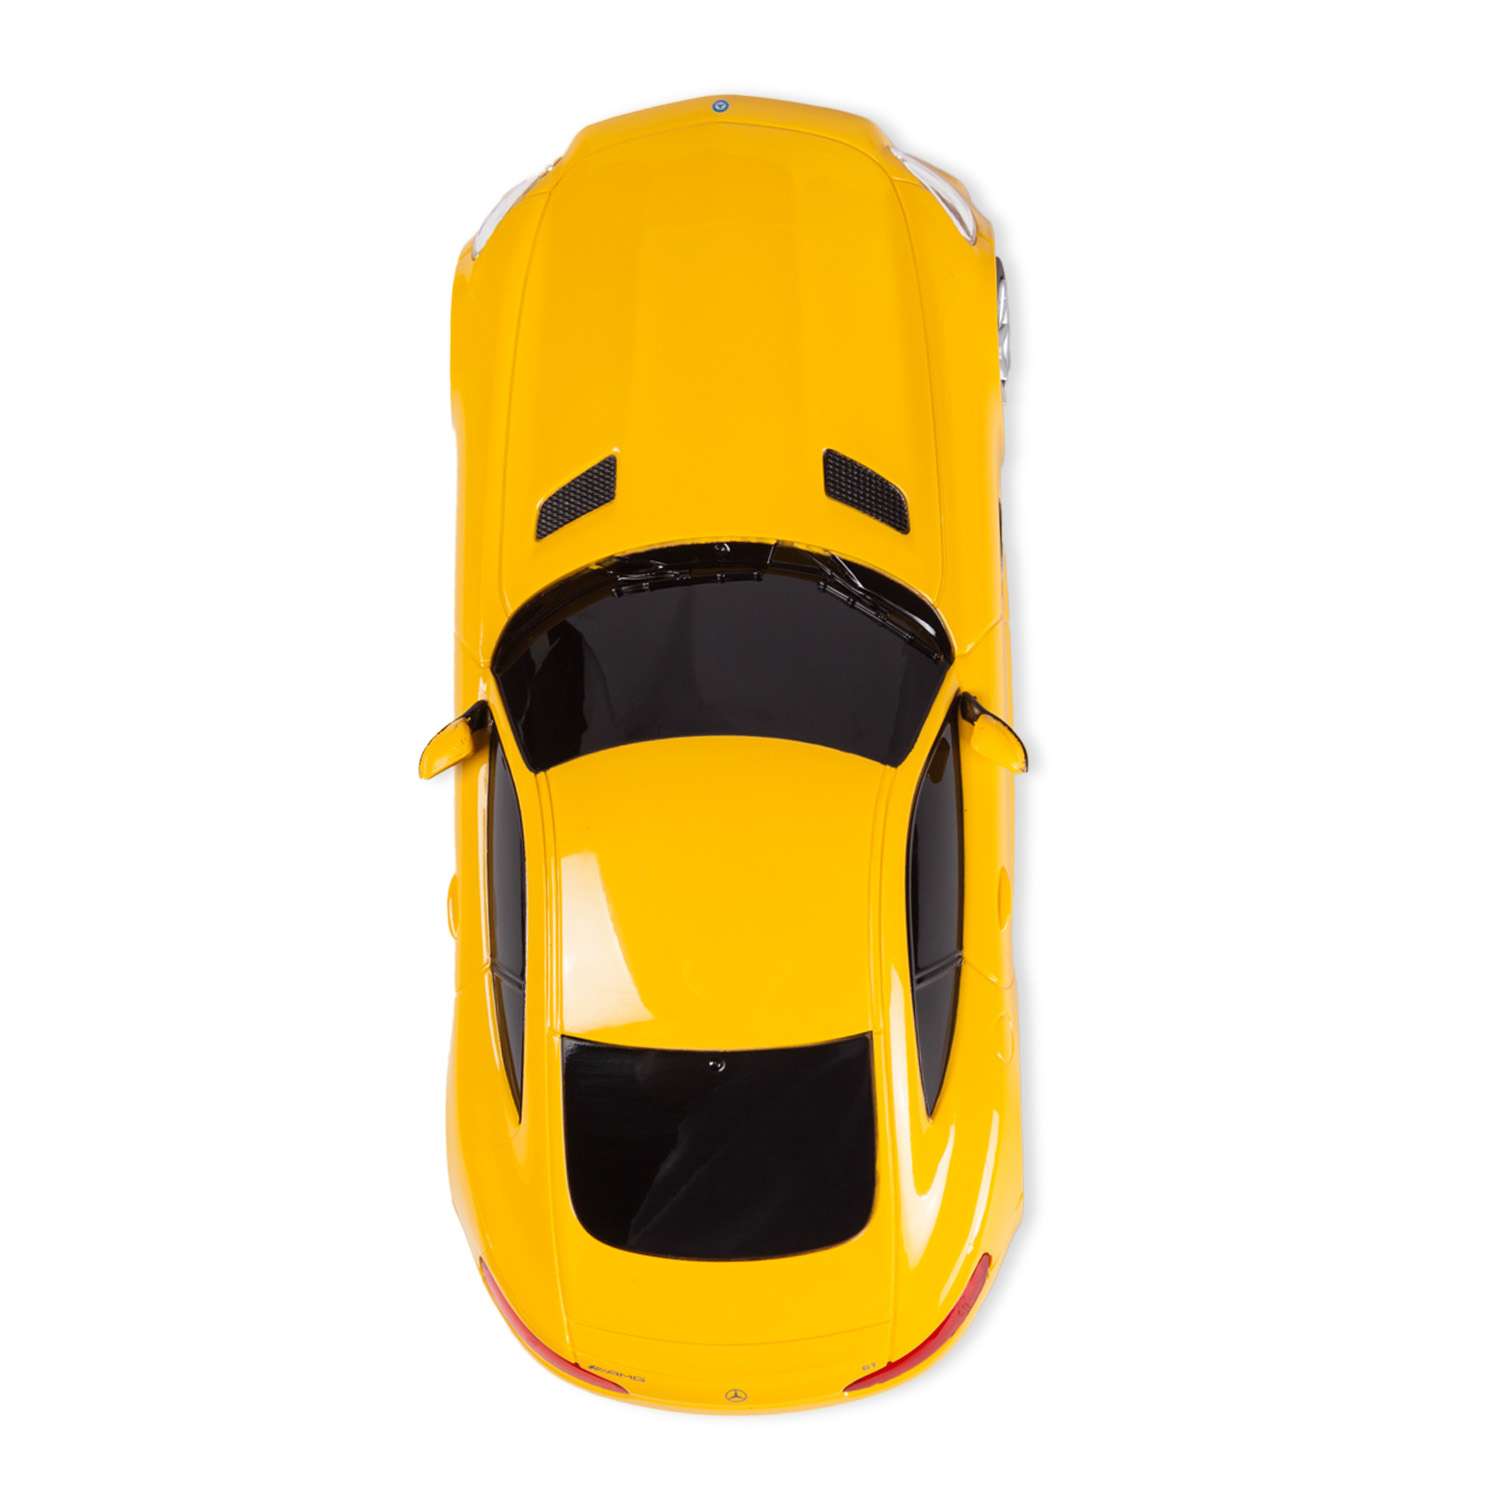 Машинка р/у Rastar Mercedes AMG GT 1:24 желтая - фото 7